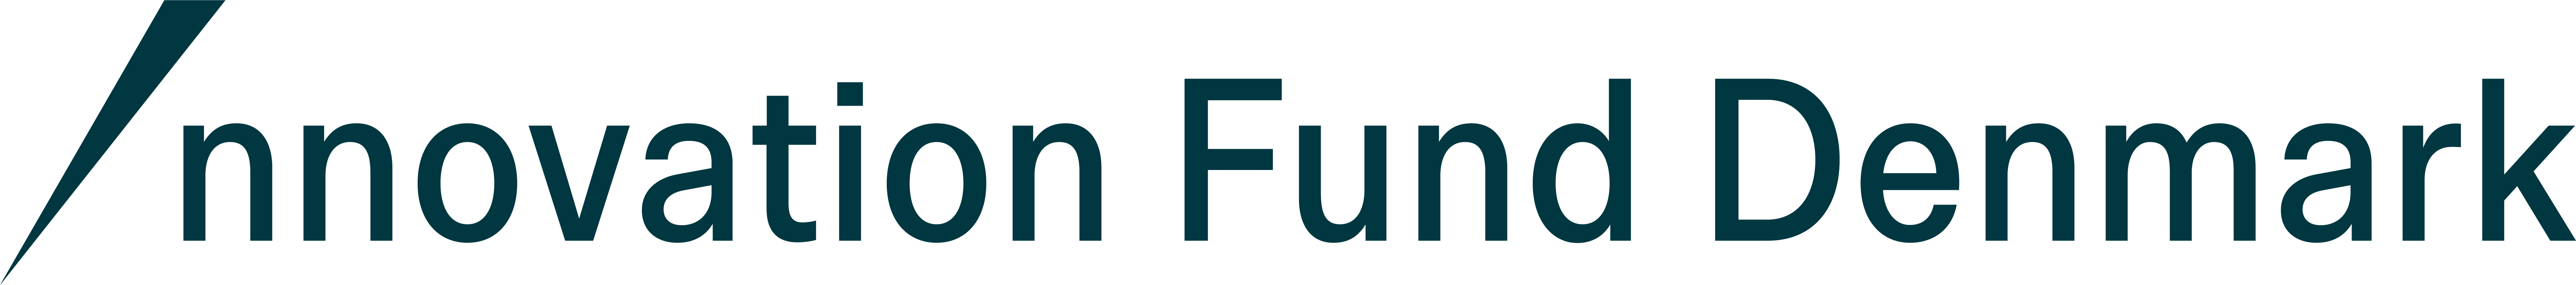 Copy-of-Innovationsfonden_Logo_ENG_Teal_RGB